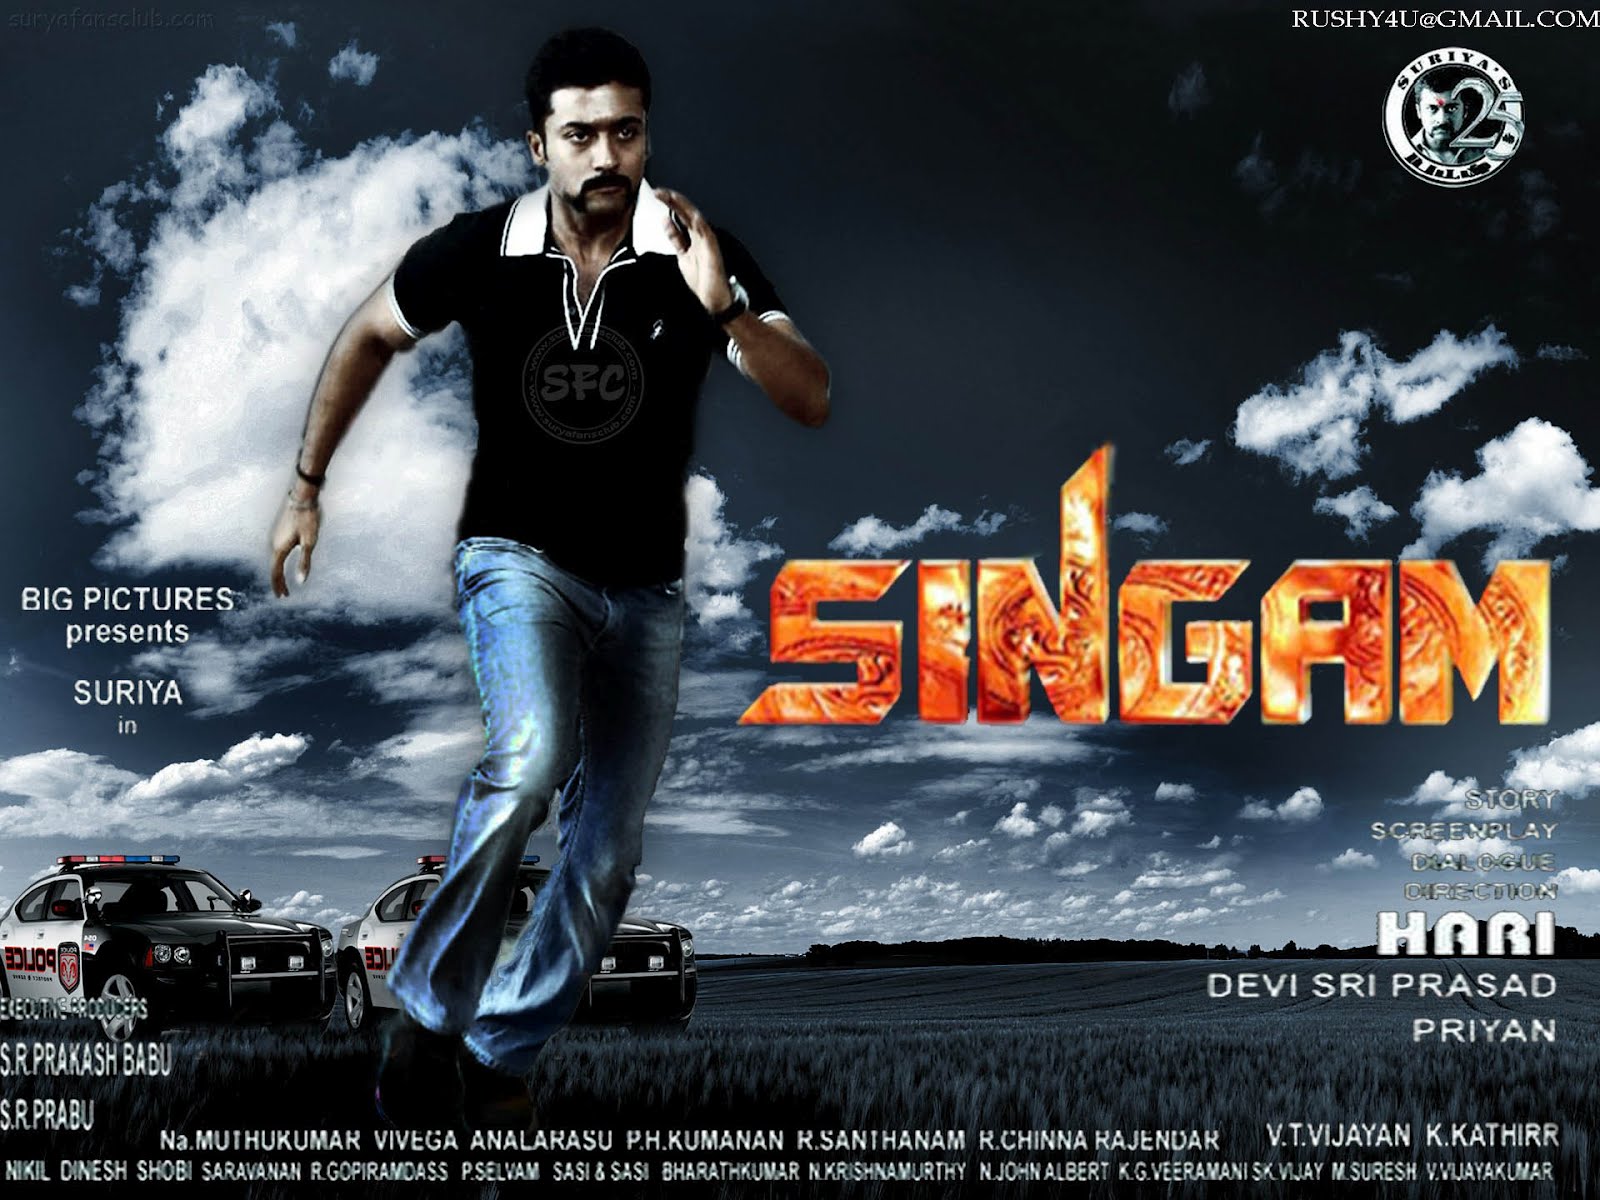 Tamil Songs Lyrics, Old & New Tamil Movie Songs Lyrics: Singam